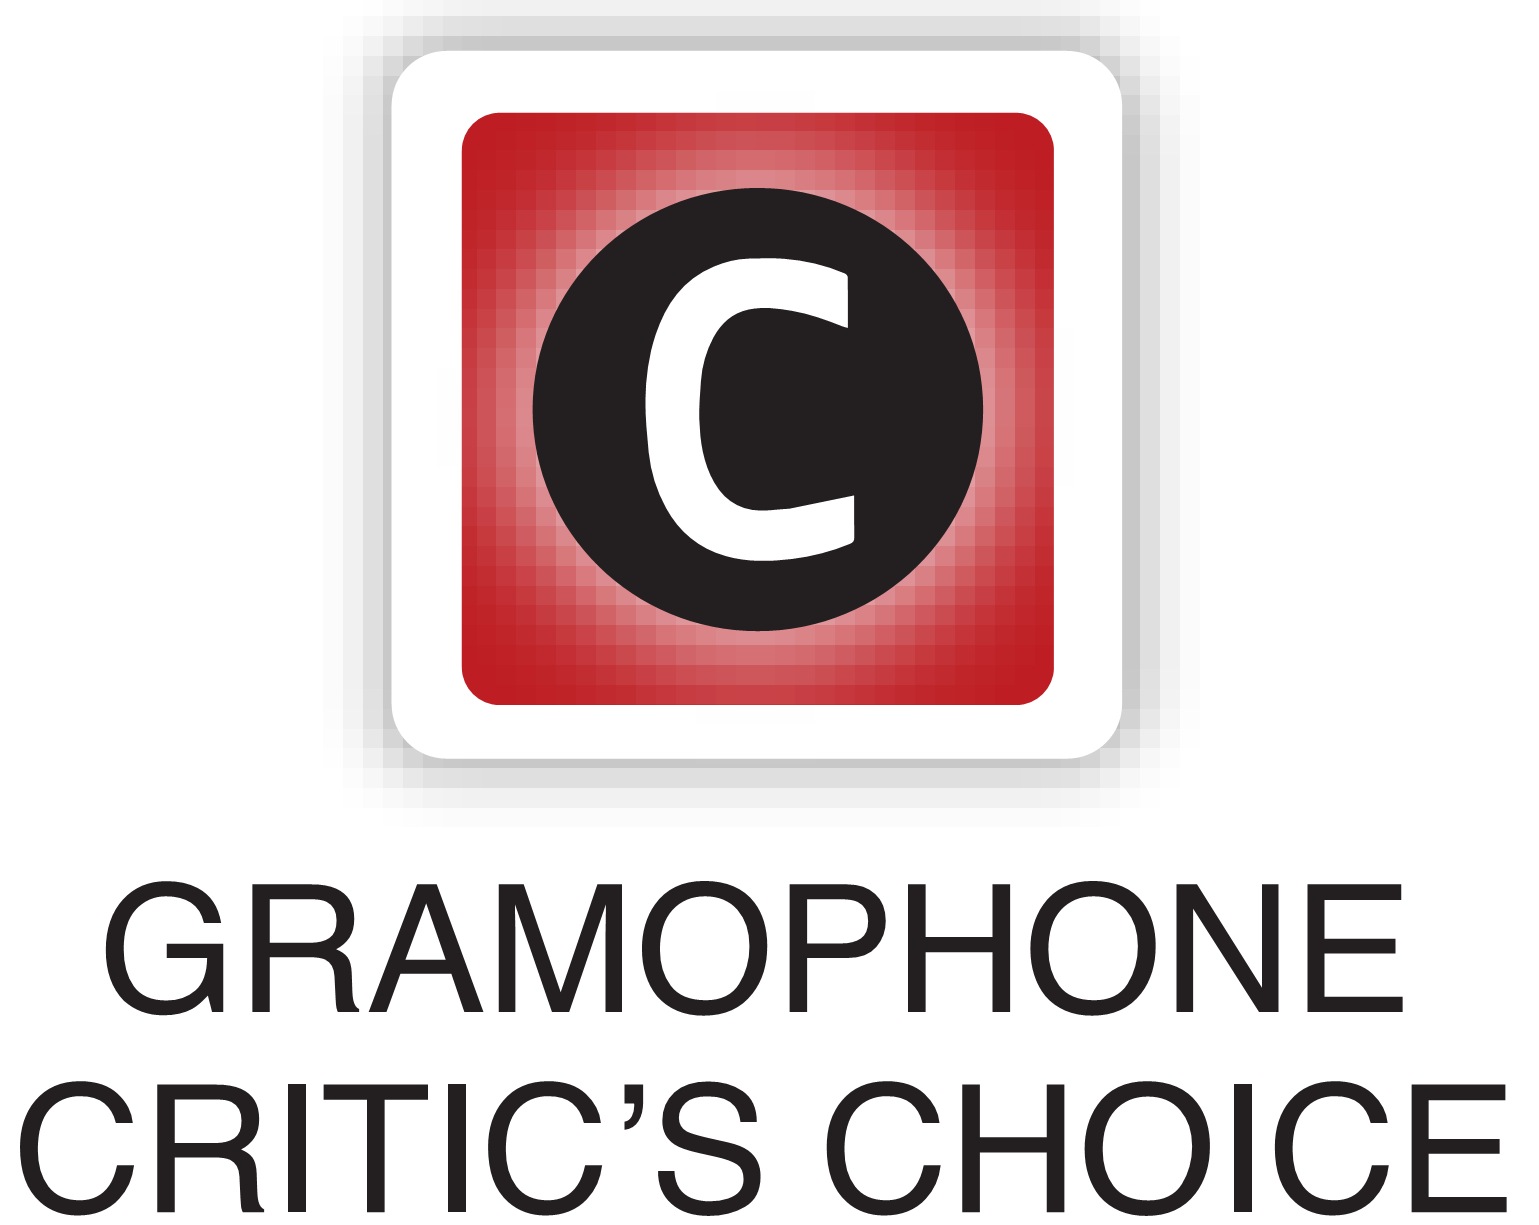 Gramophone: 'Critcs choice of the year'